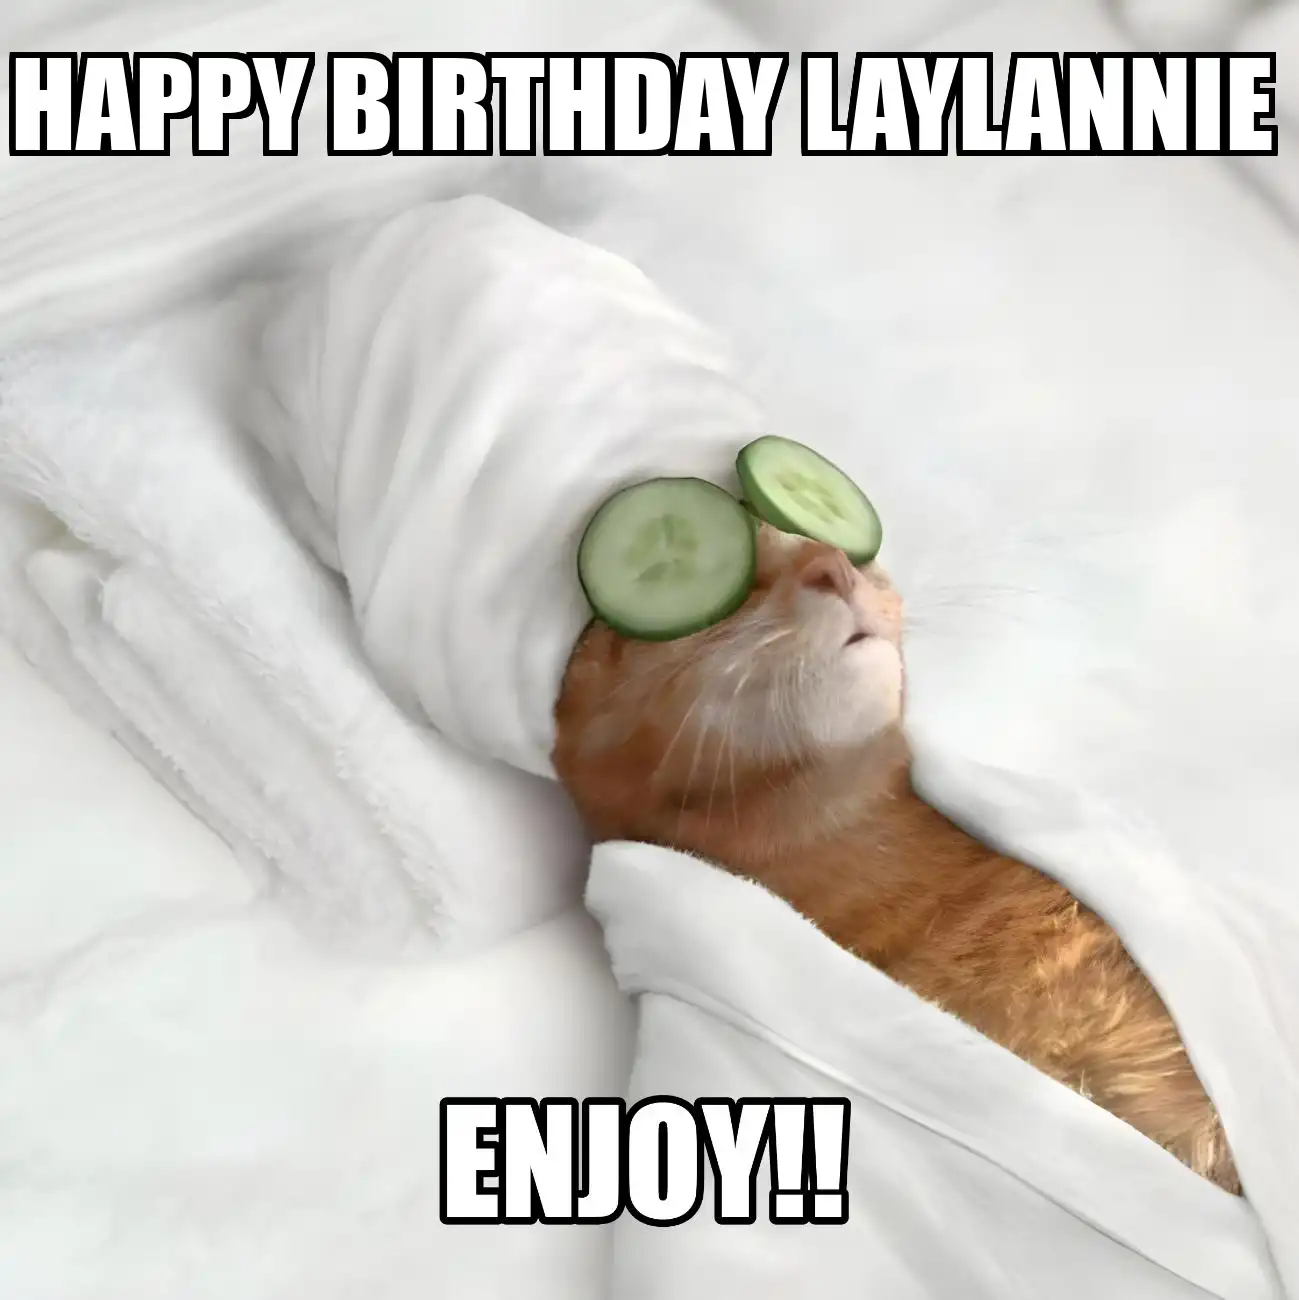 Happy Birthday Laylannie Enjoy Cat Meme